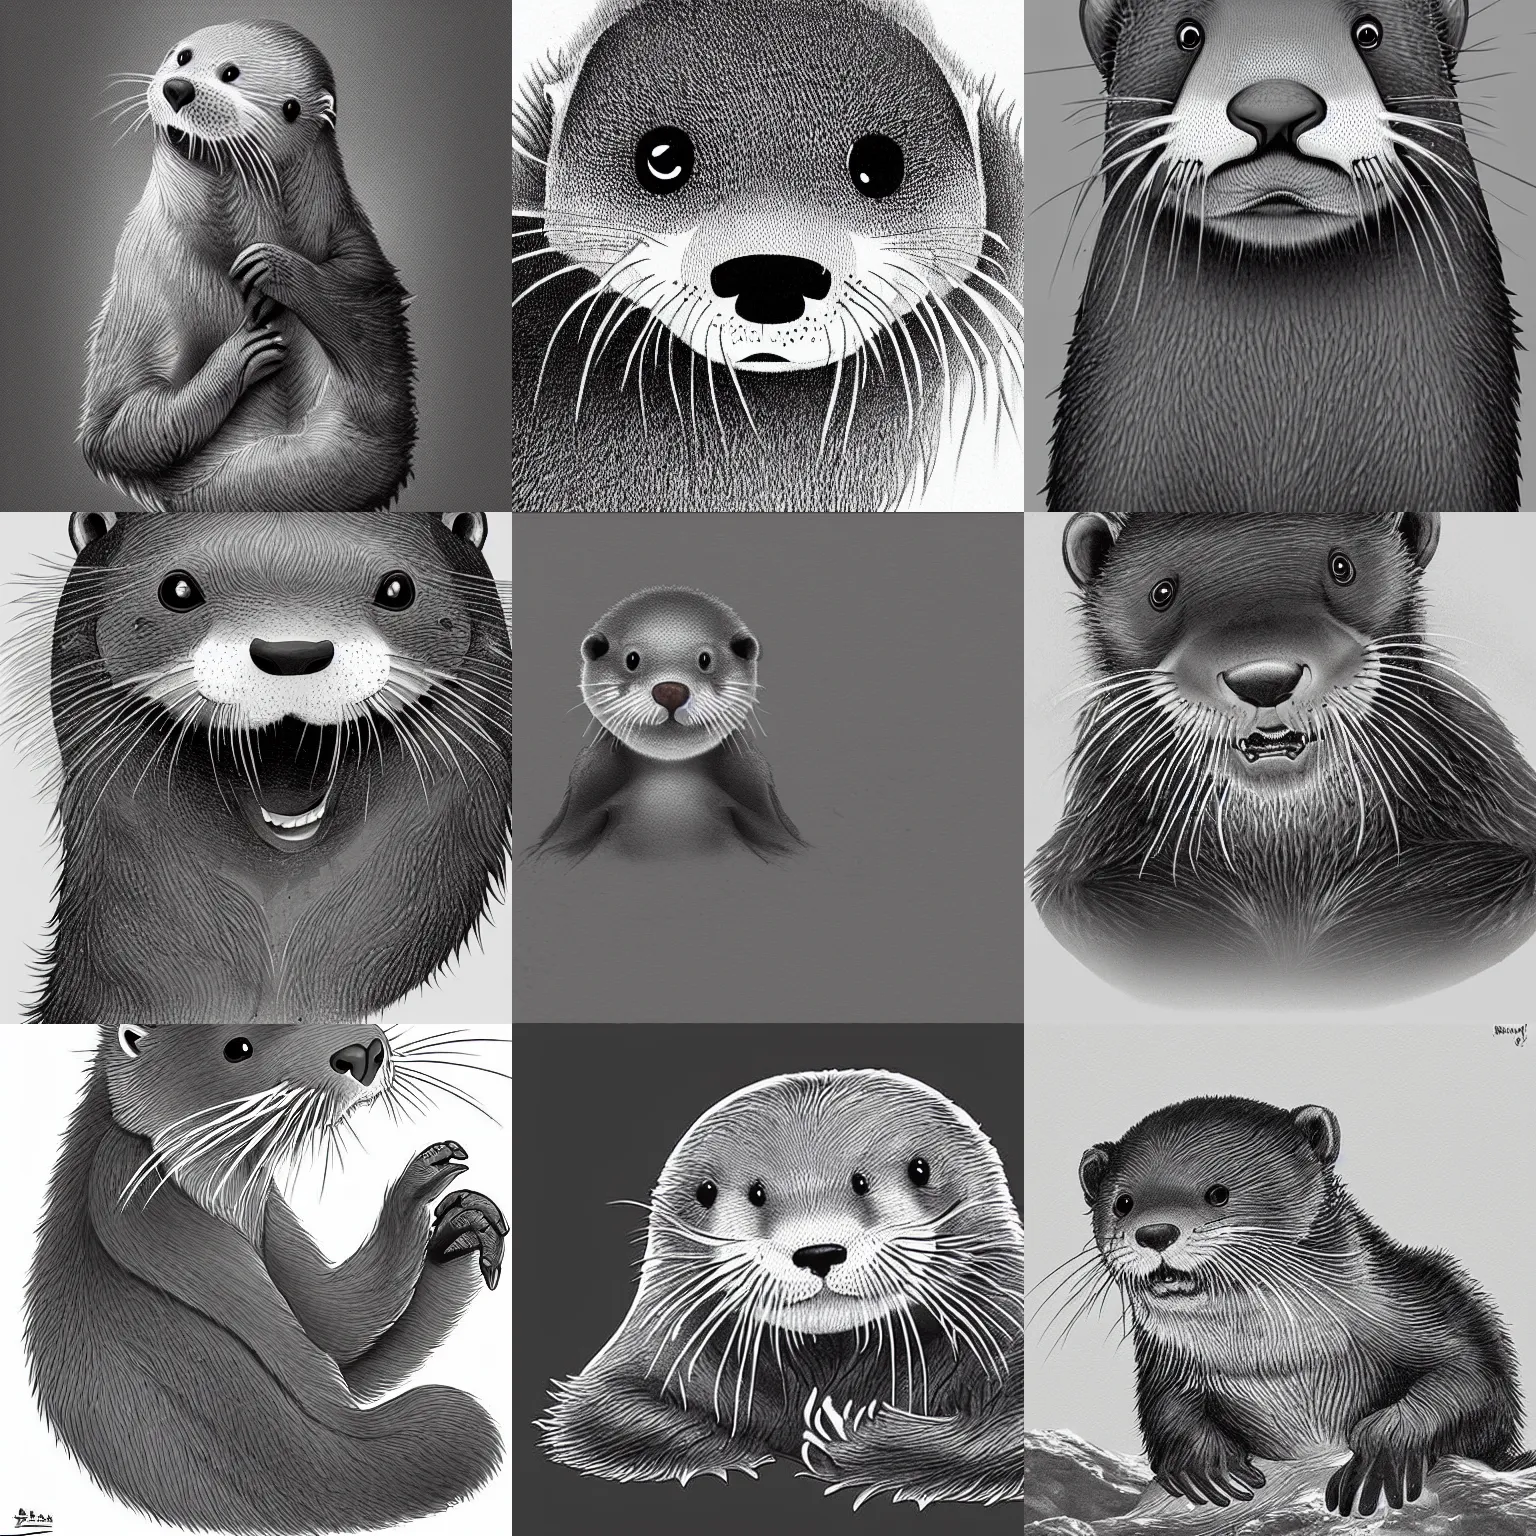 Prompt: cute otter, naranbaatar ganbold, concept art, highly detailed, eddotorial illustration, b & w